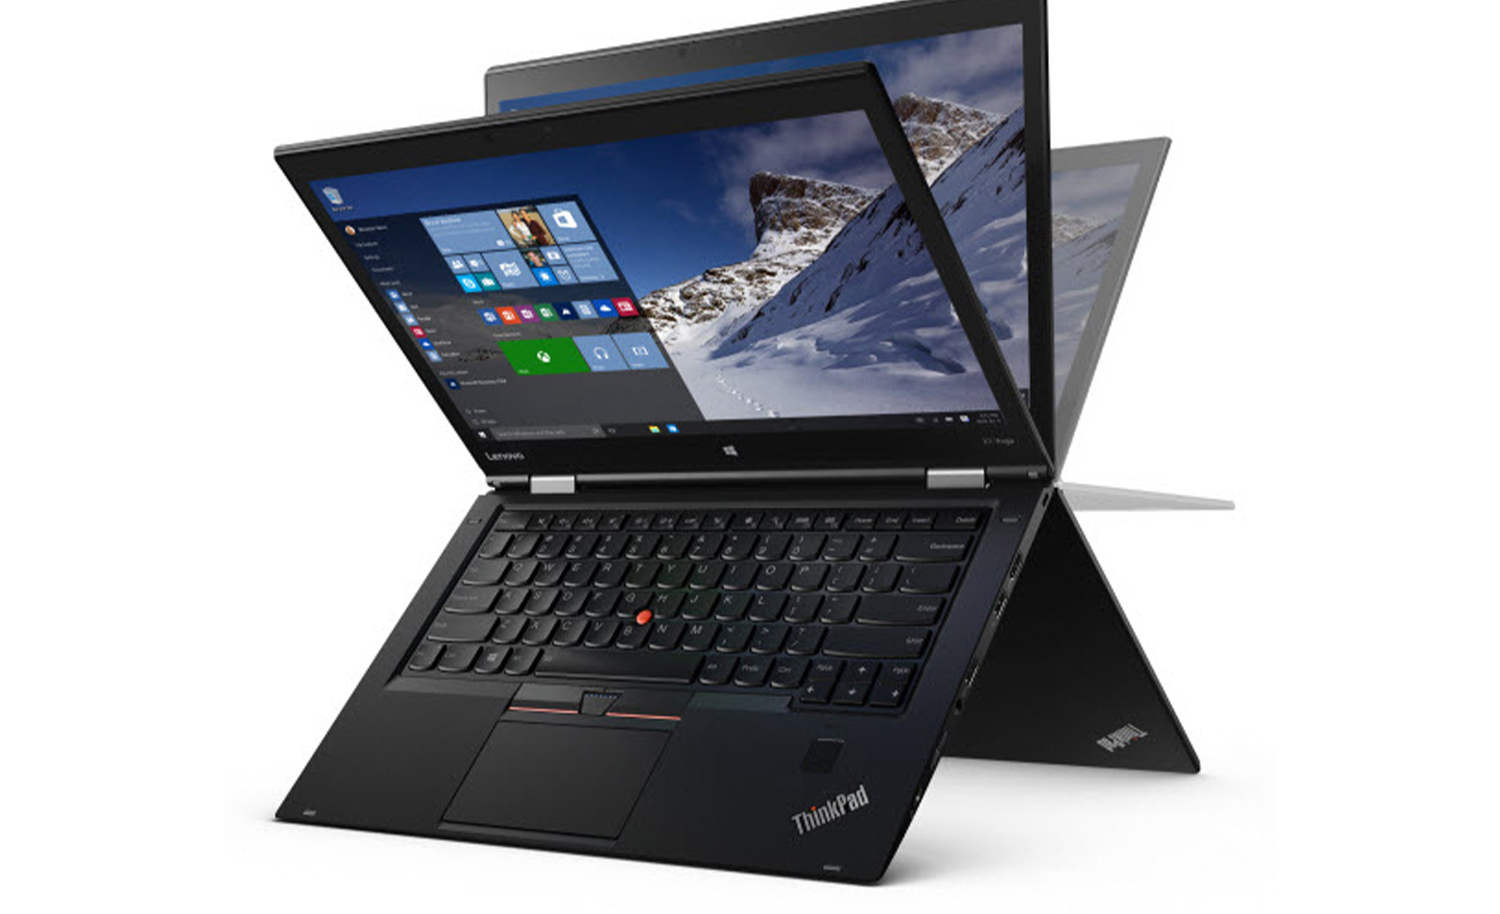 Lenovo ThinkPad X1 Yoga Gen 1 Intel Core i7 6th Gen 16GB RAM 256GB SSD Touchscreen Windows 10 Pro